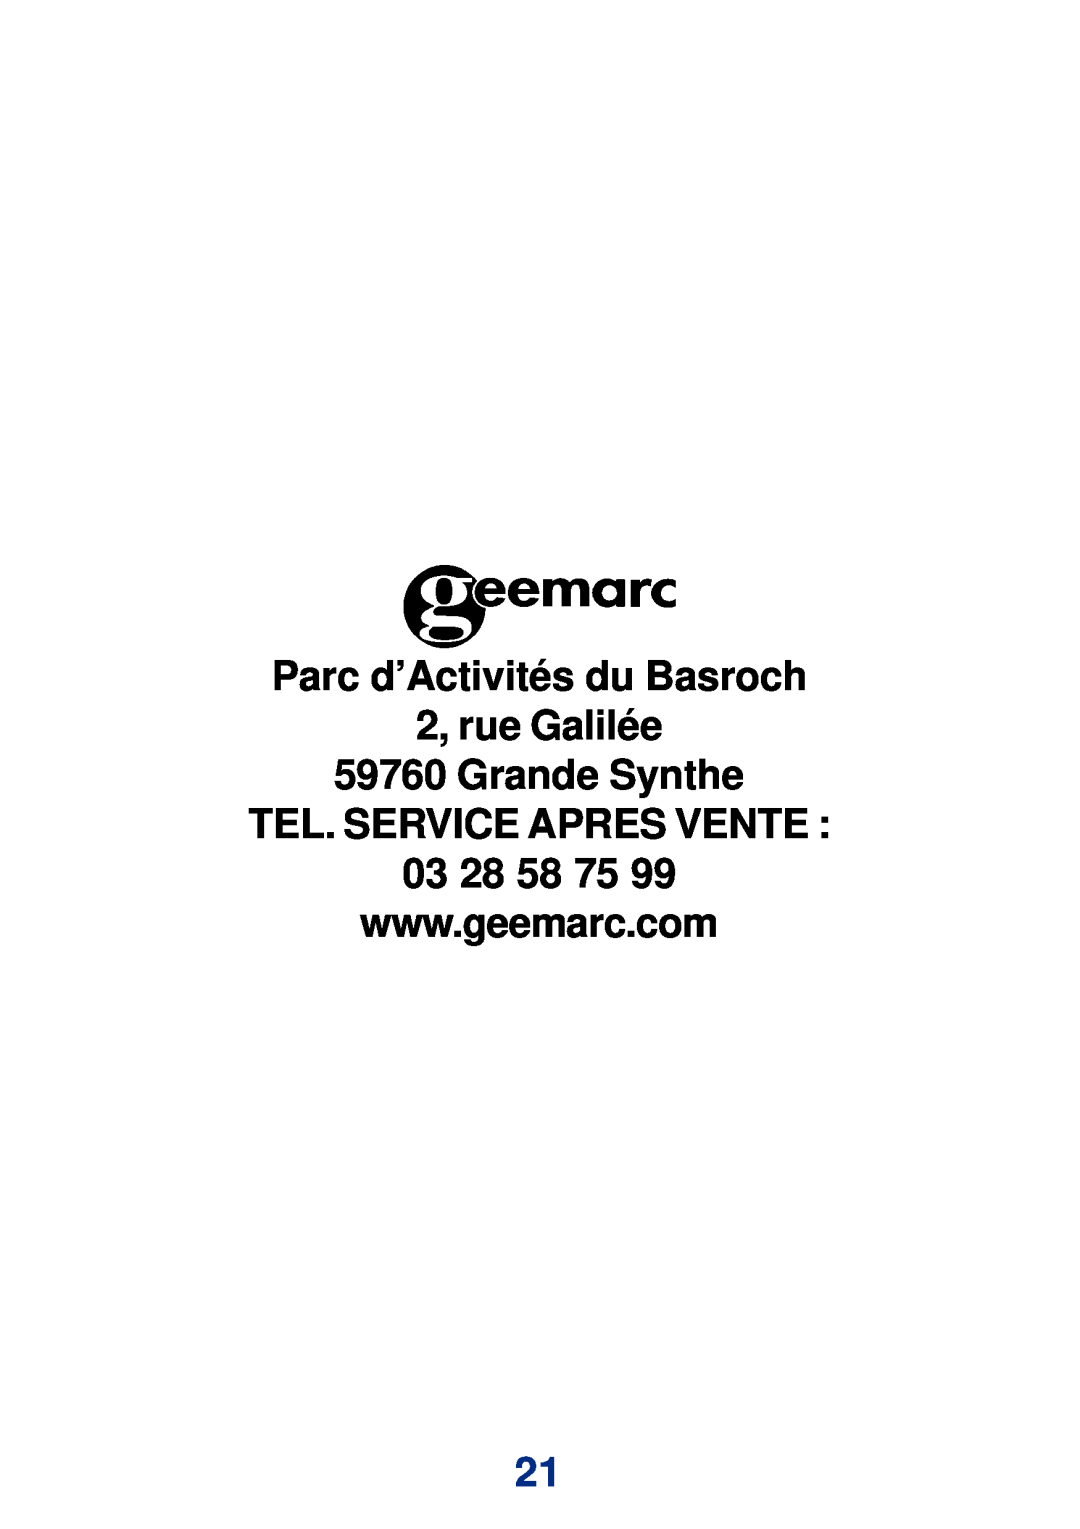 Geemarc Large Display Alarm Clock manual Parc d’Activités du Basroch 2, rue Galilée 59760 Grande Synthe 